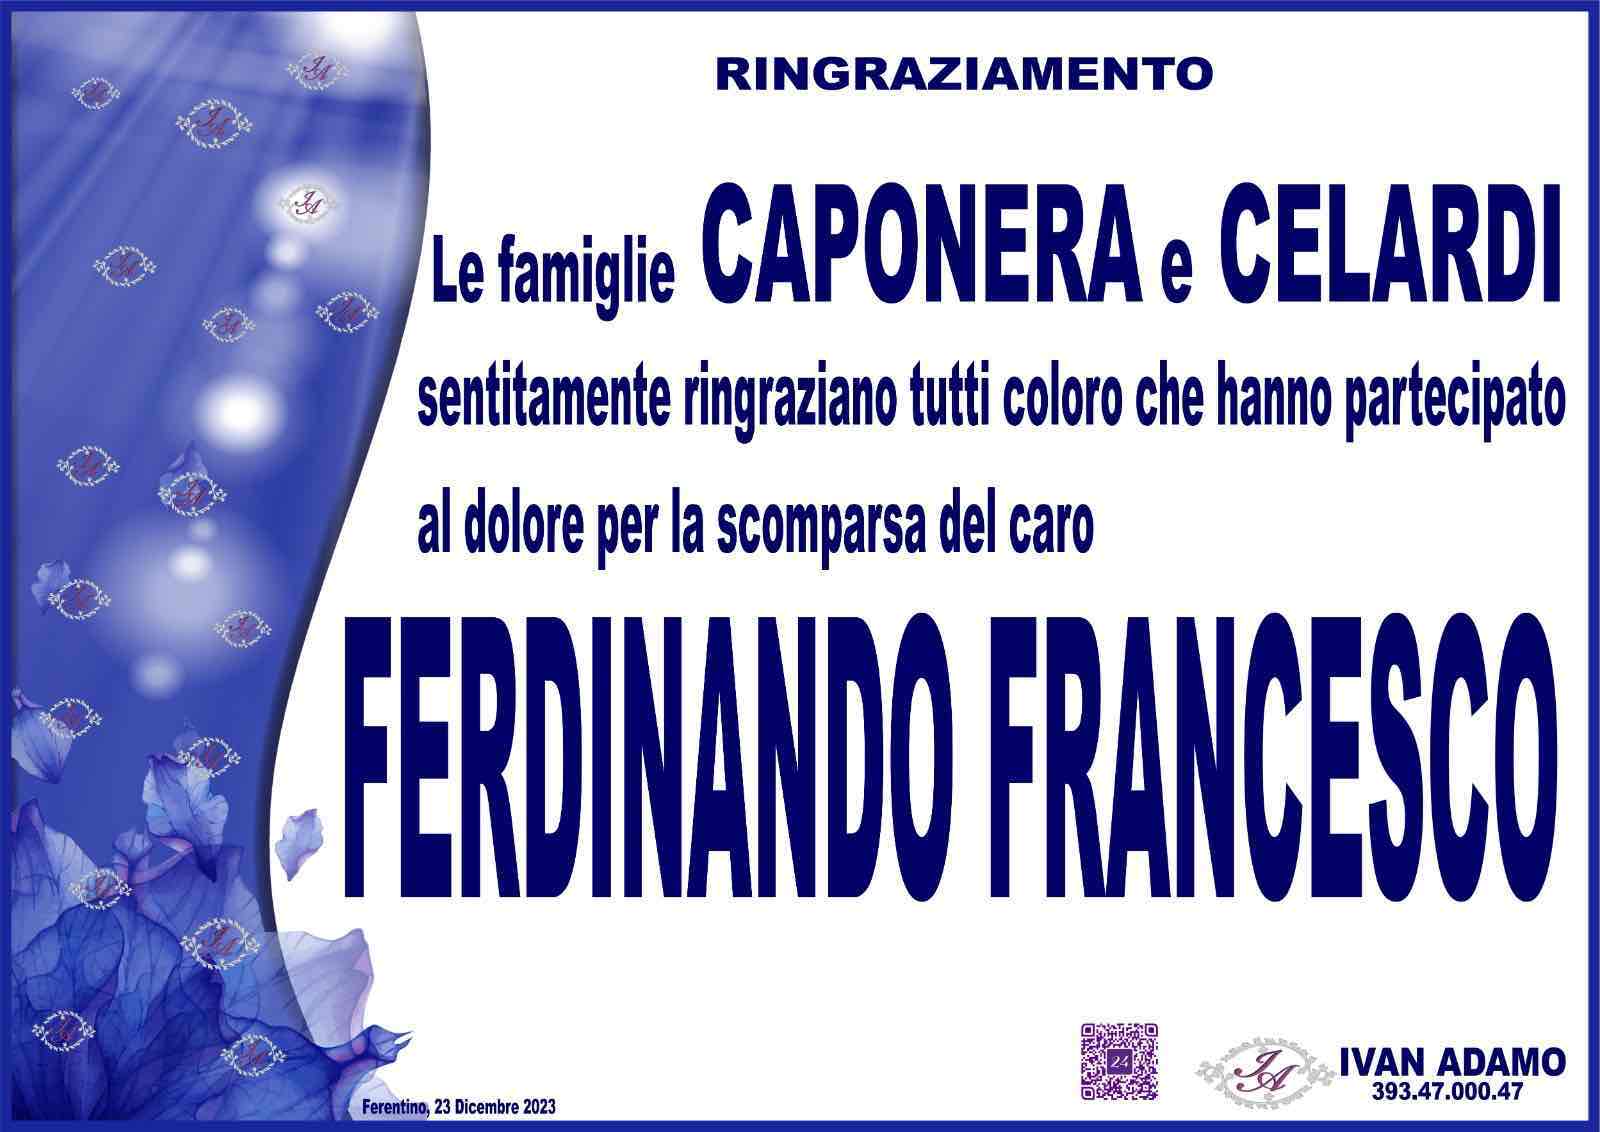 Ferdinando Francesco Caponera